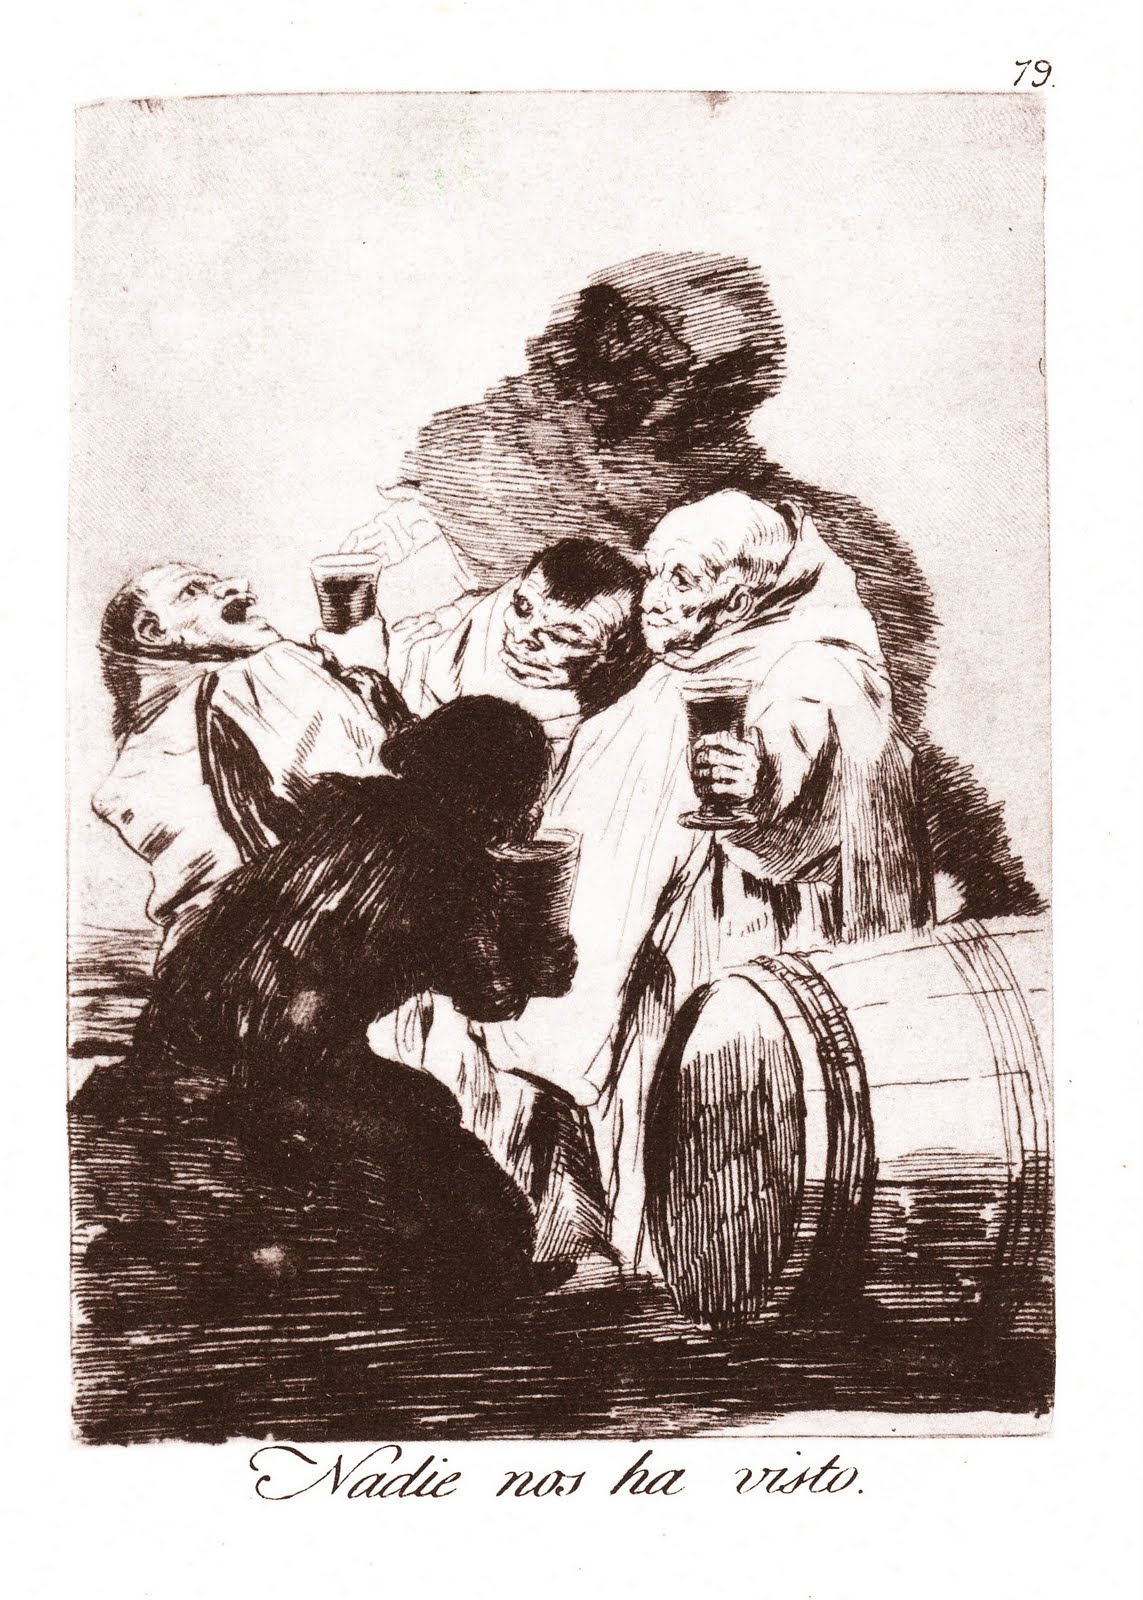 The Retro/Vintage Scan Emporium: Goya etchings